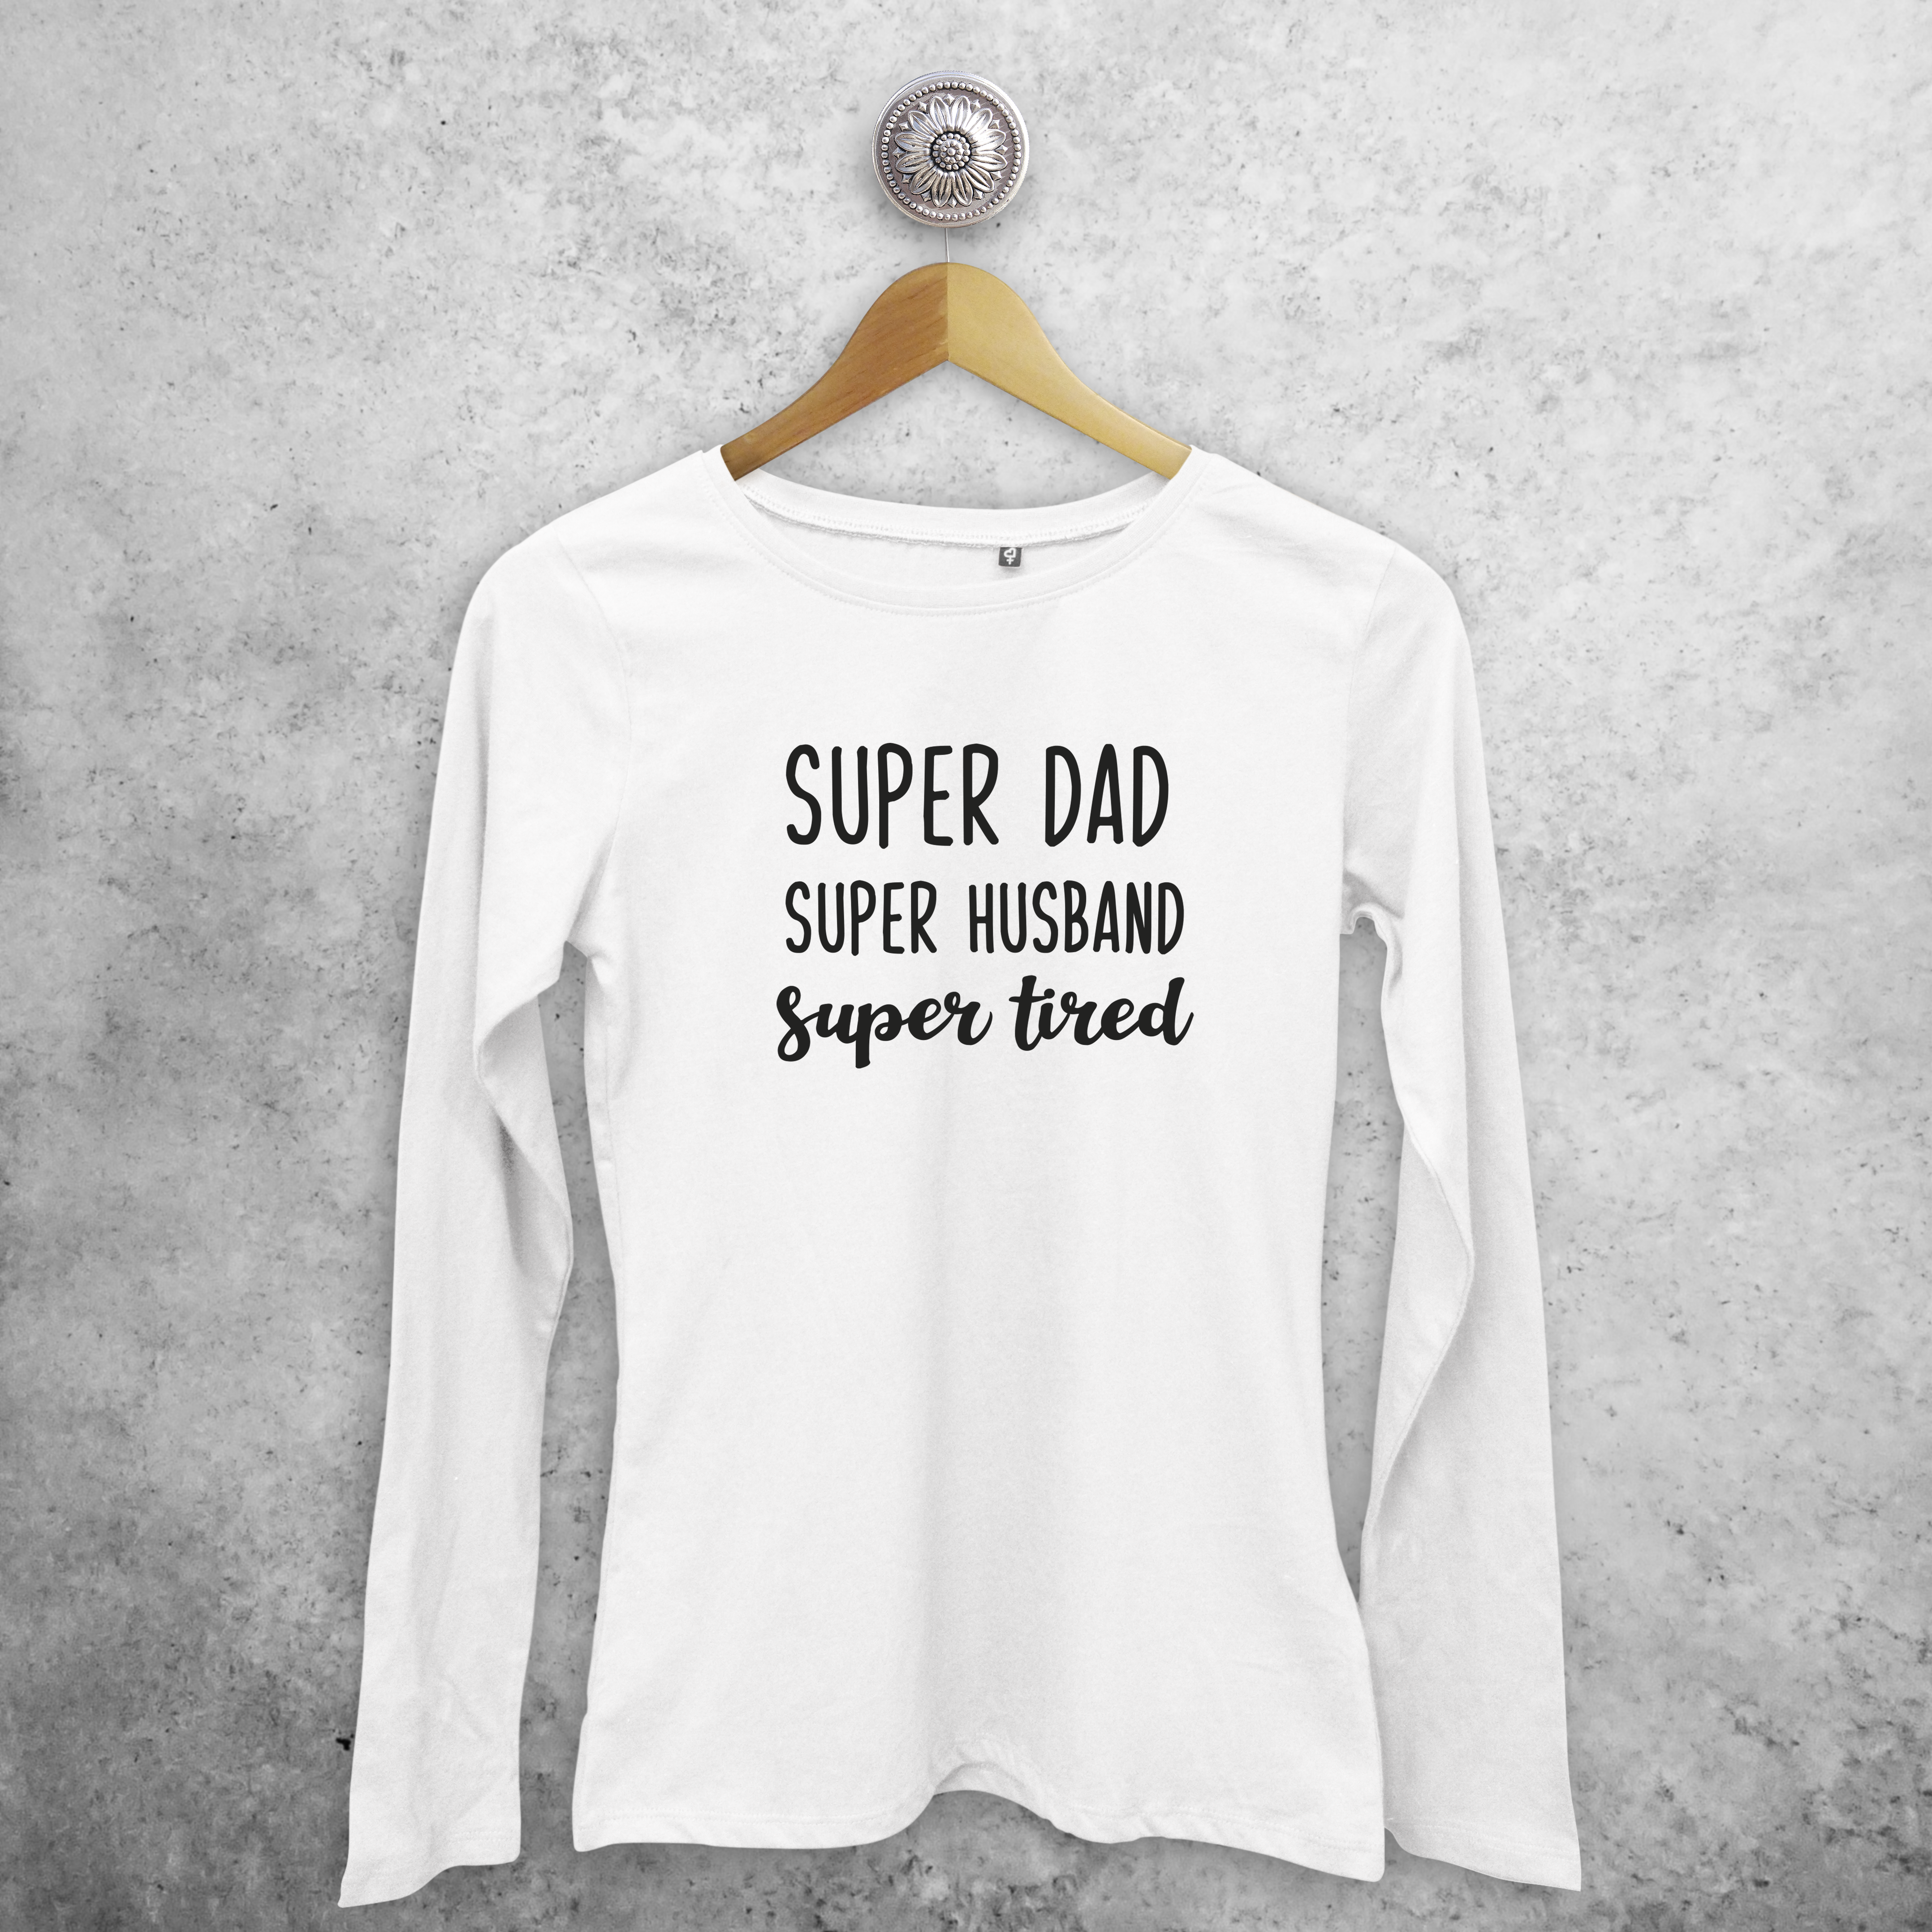 'Super dad, Super husband, Super tired' adult longsleeve shirt